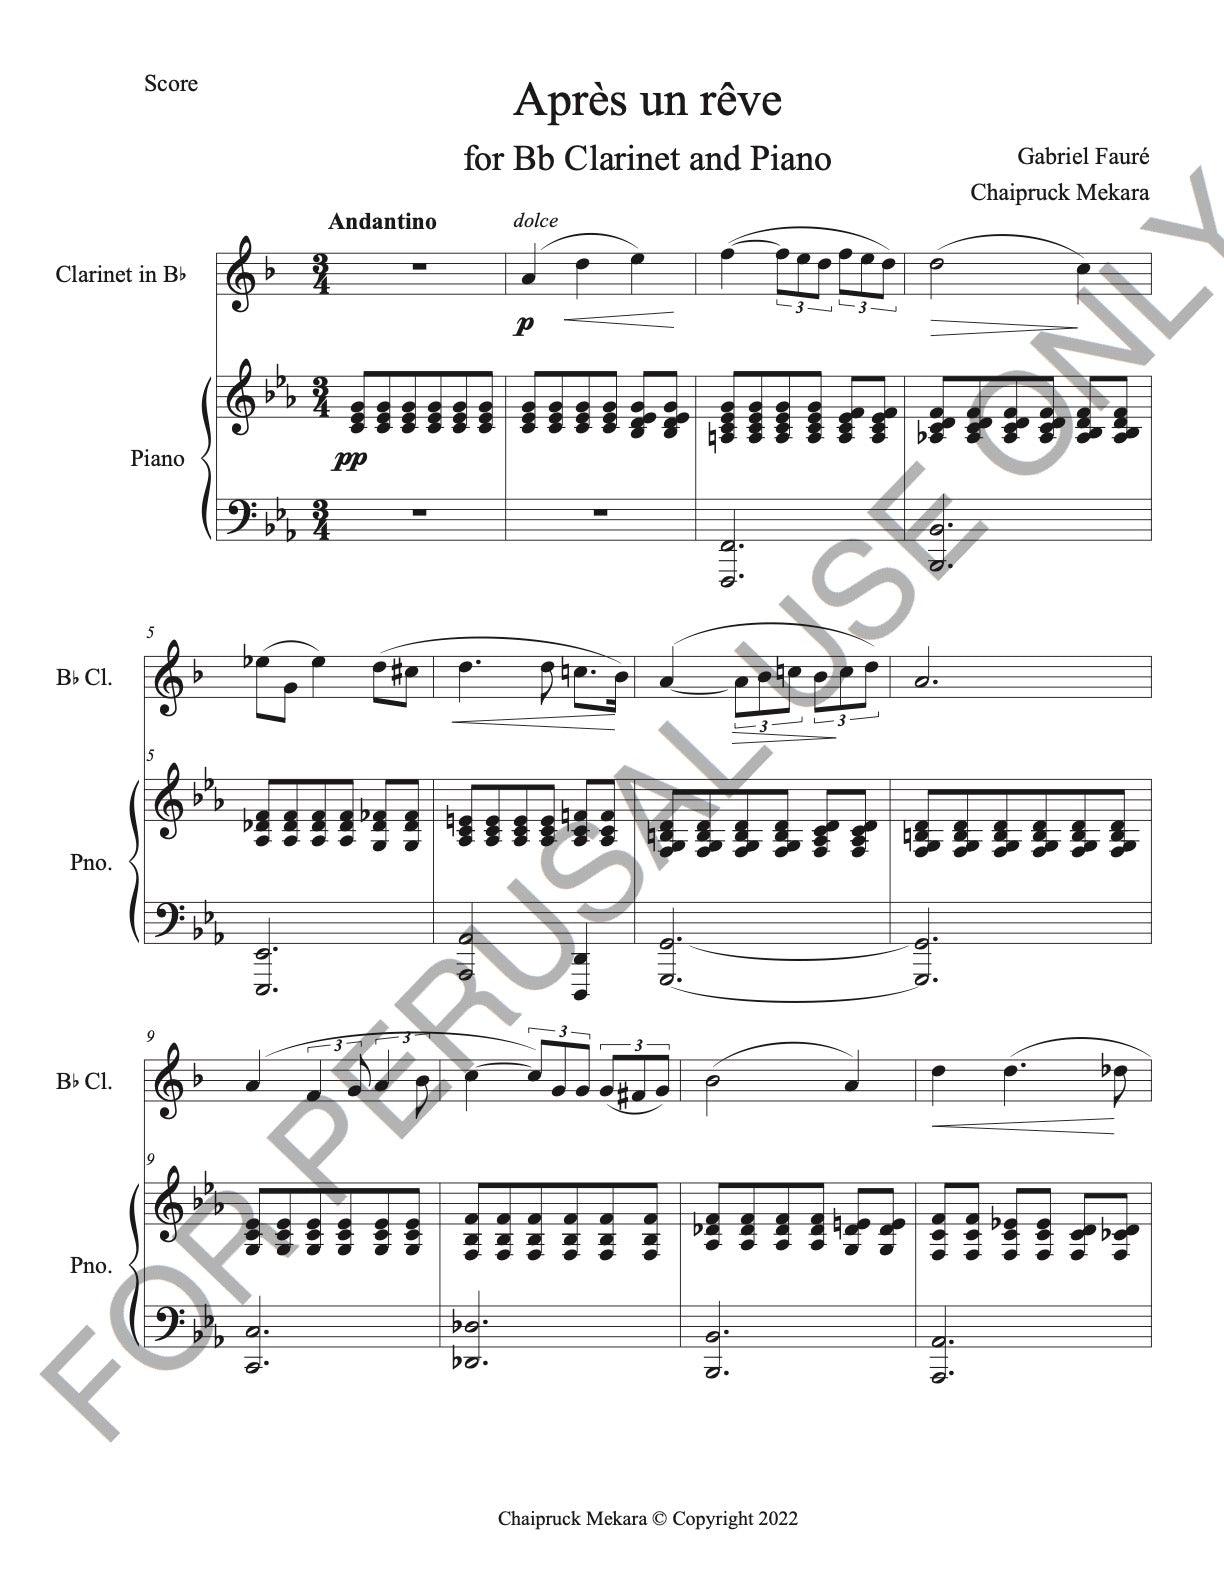 Bb Clarinet and Piano Sheet Music: Après un rêve by Faure (score+parts+mp3) - ChaipruckMekara